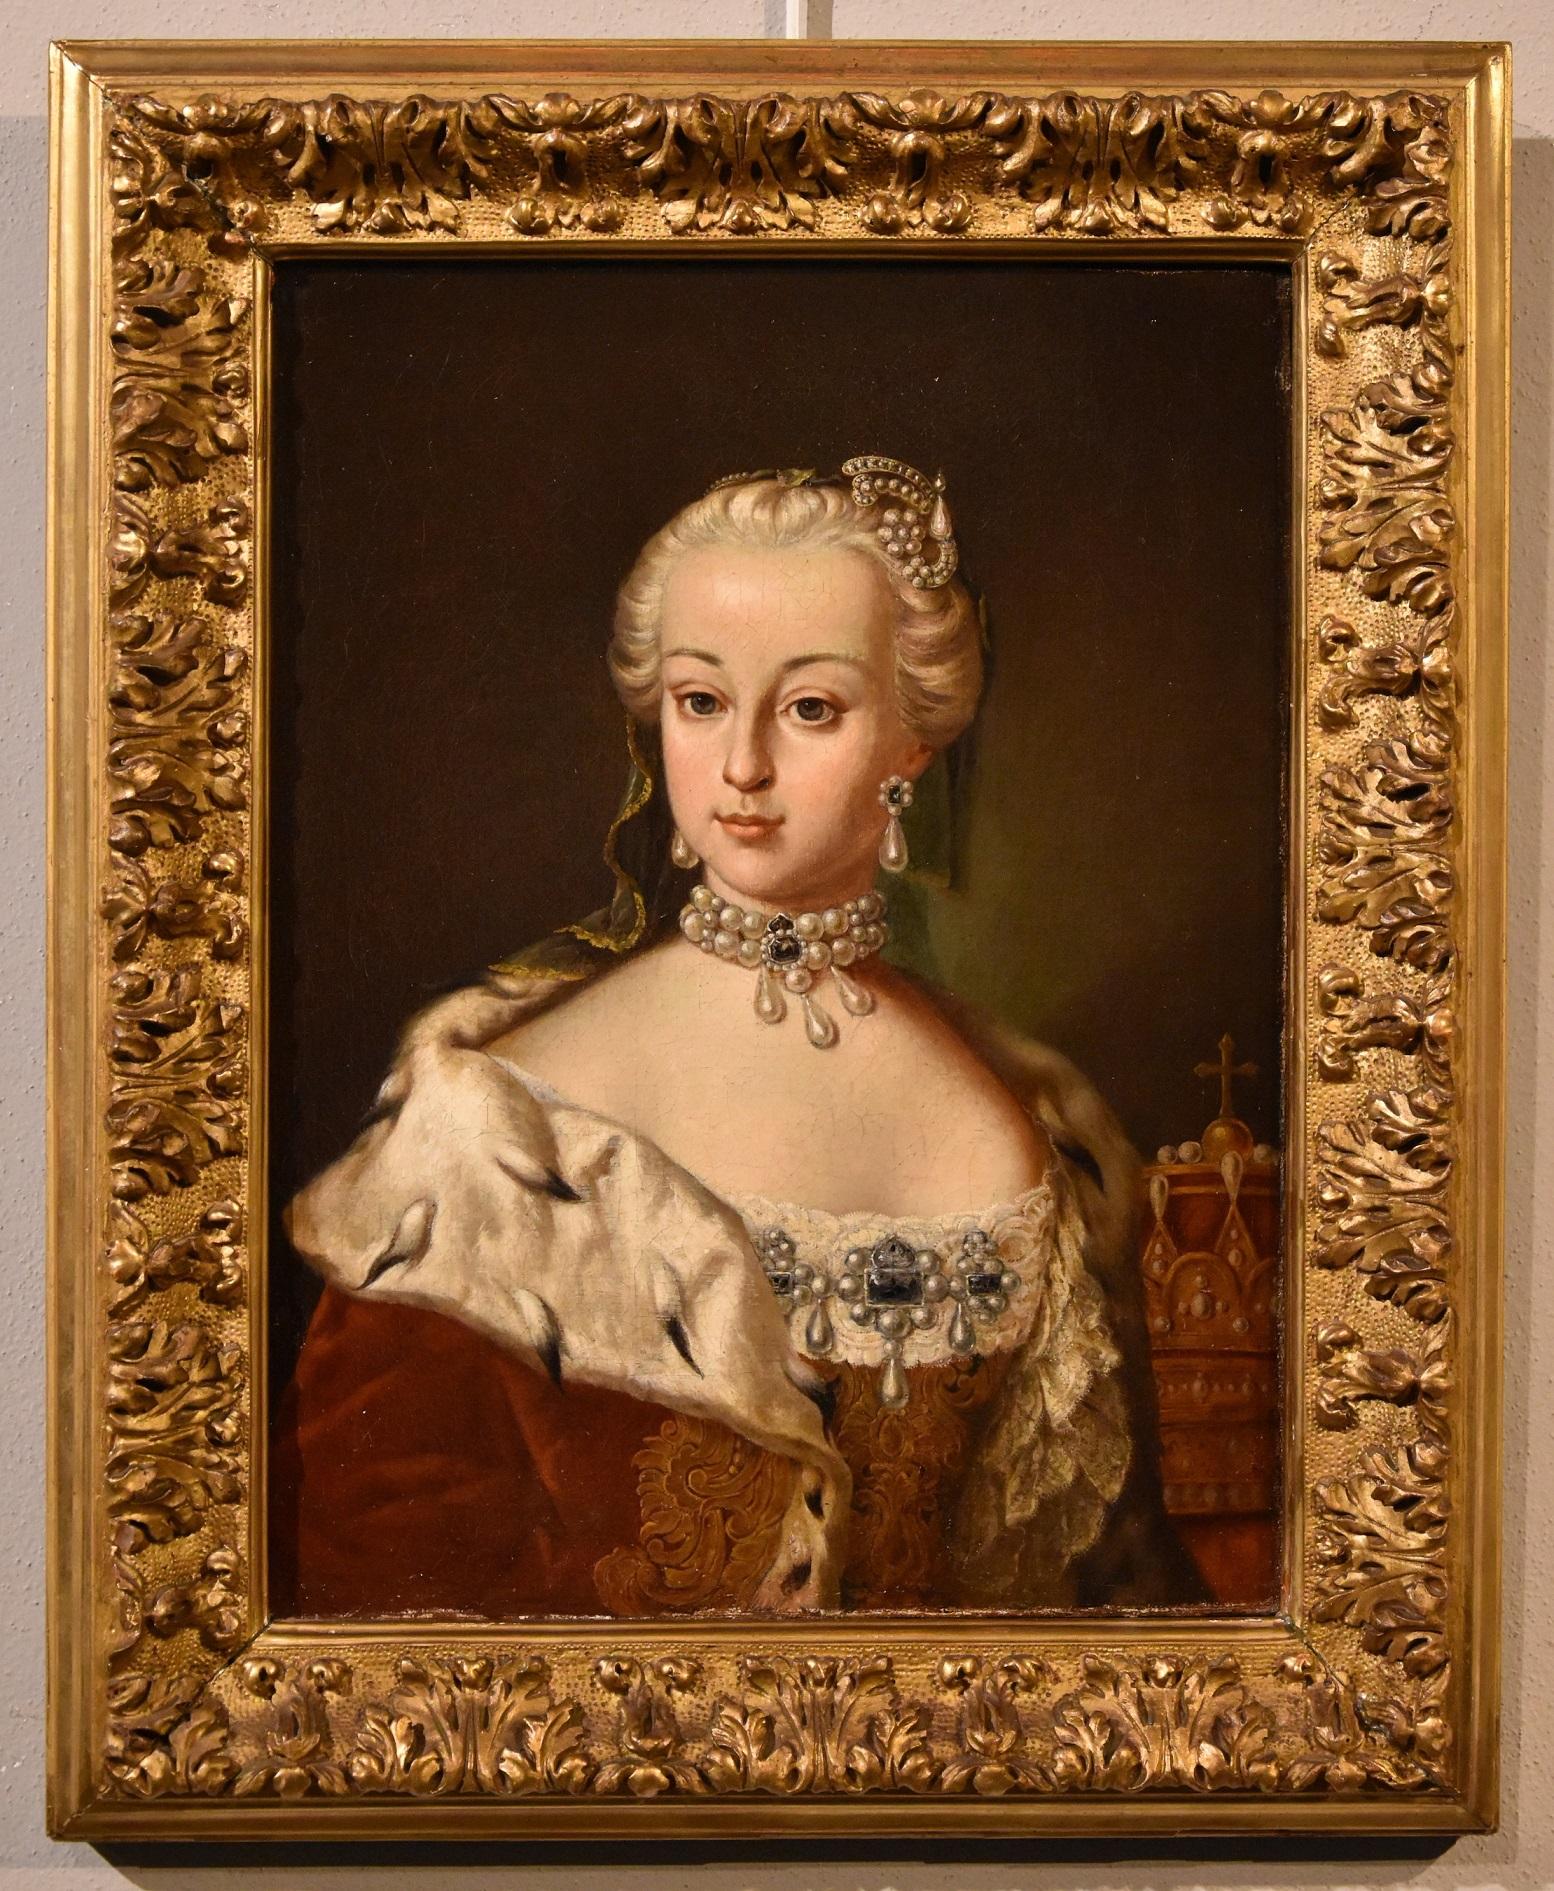 Empress Maria Van Meytens Portrait Paint Oil on canvas Old master 18th Century  - Painting by Martin van Meytens (Stockholm 1695 - Vienna 1770)